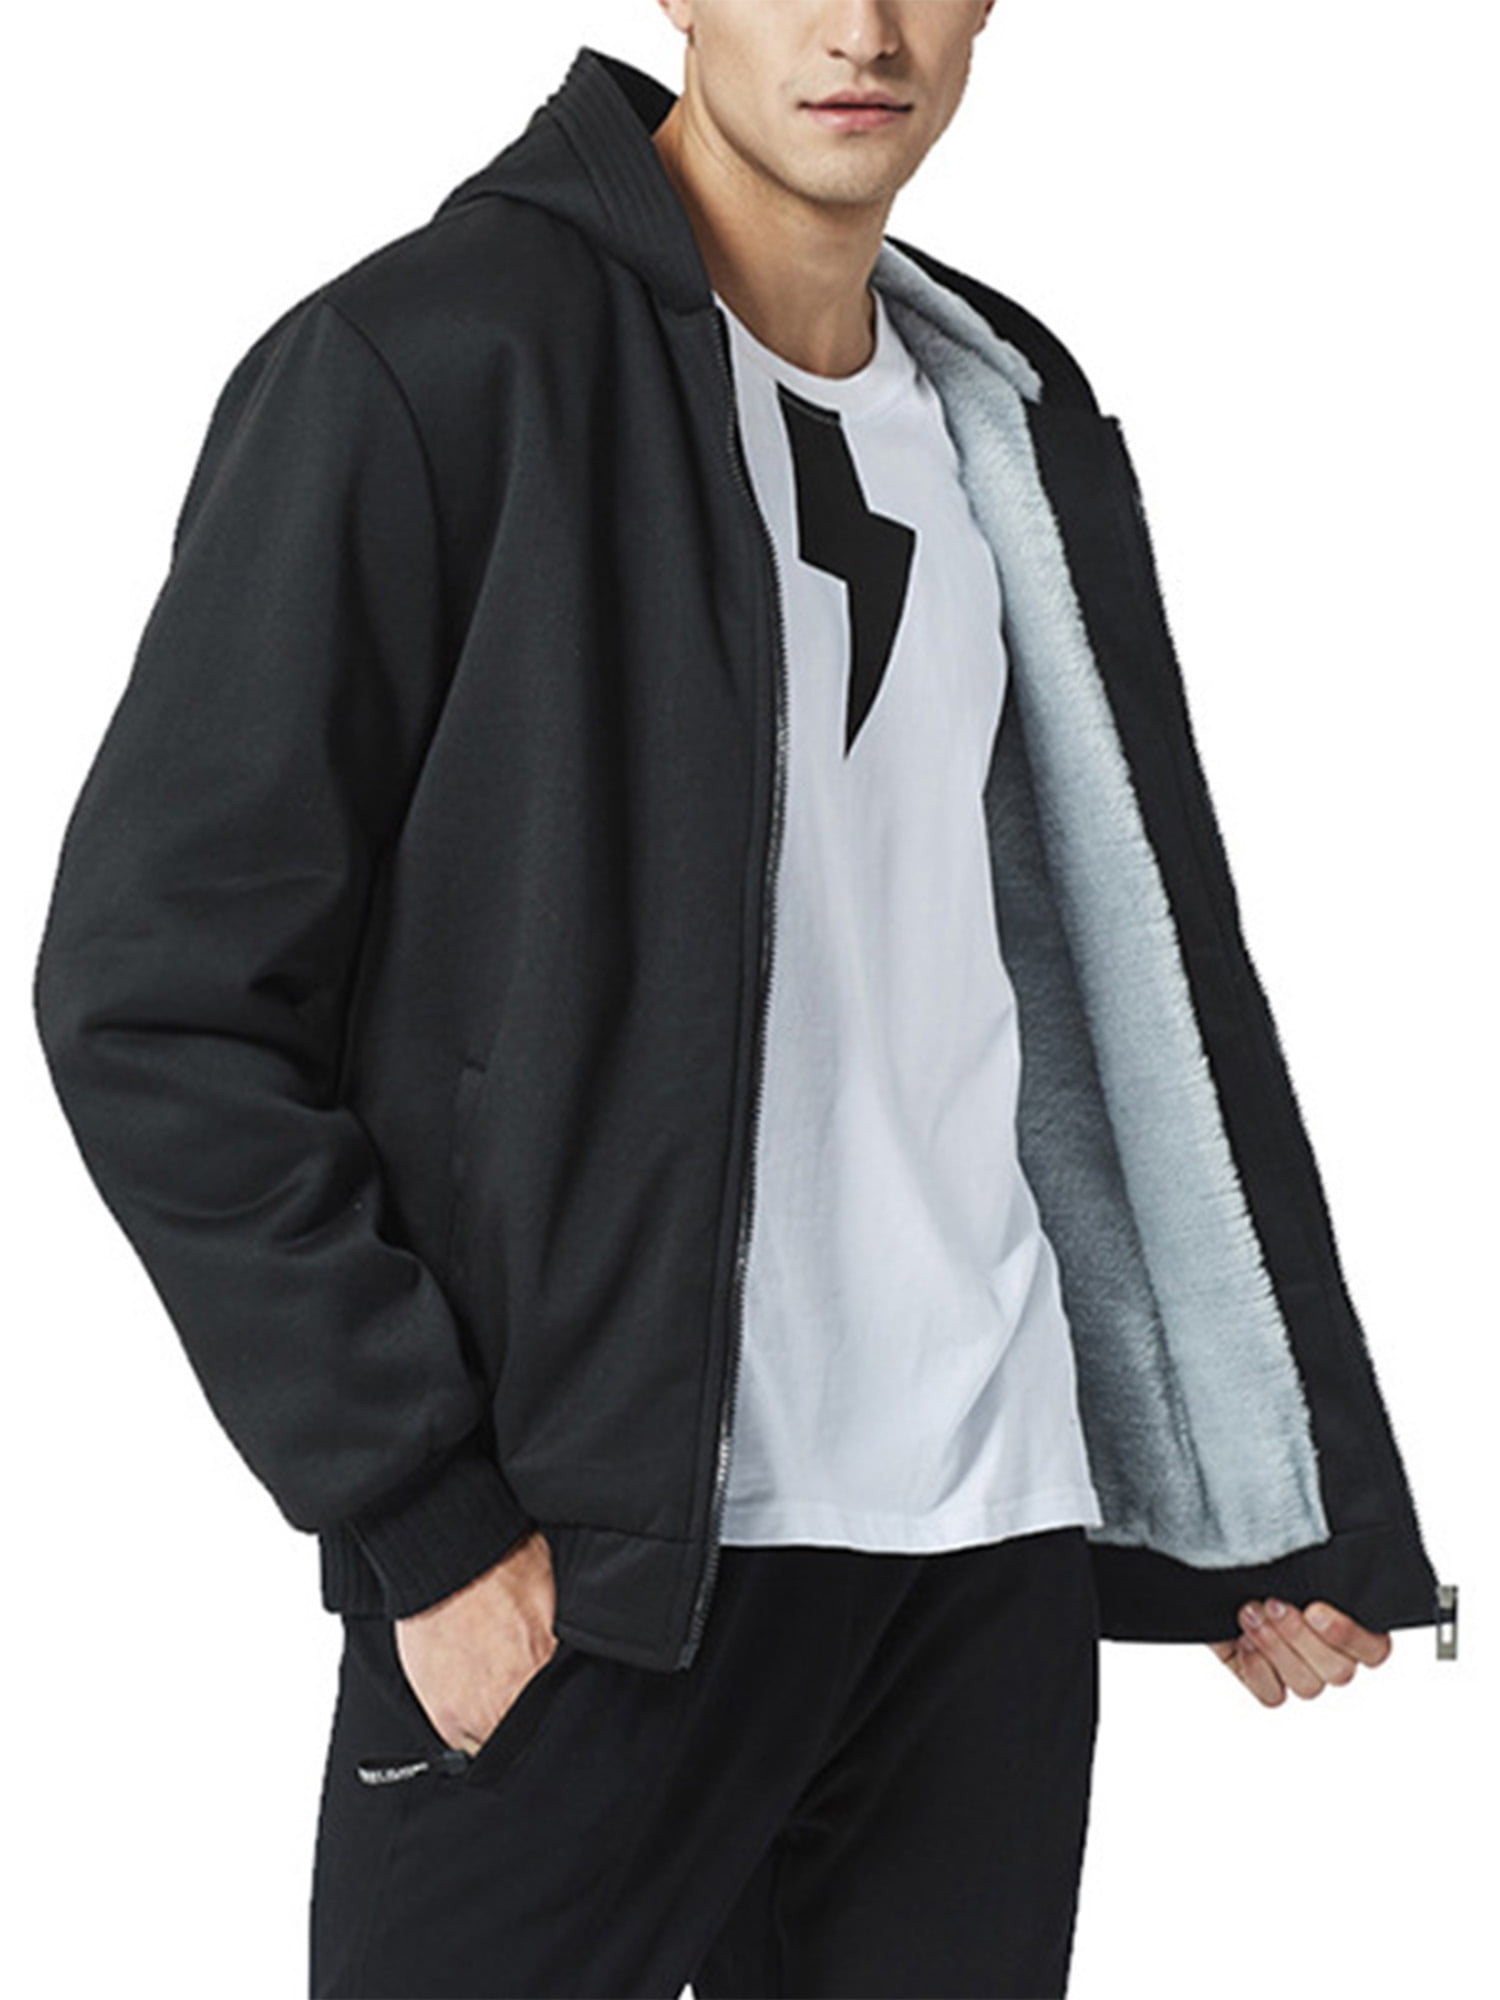 YJRTISF Big Pockets Winter Unique Fleece Pullover Hoodie Sweatshirt for Mens 